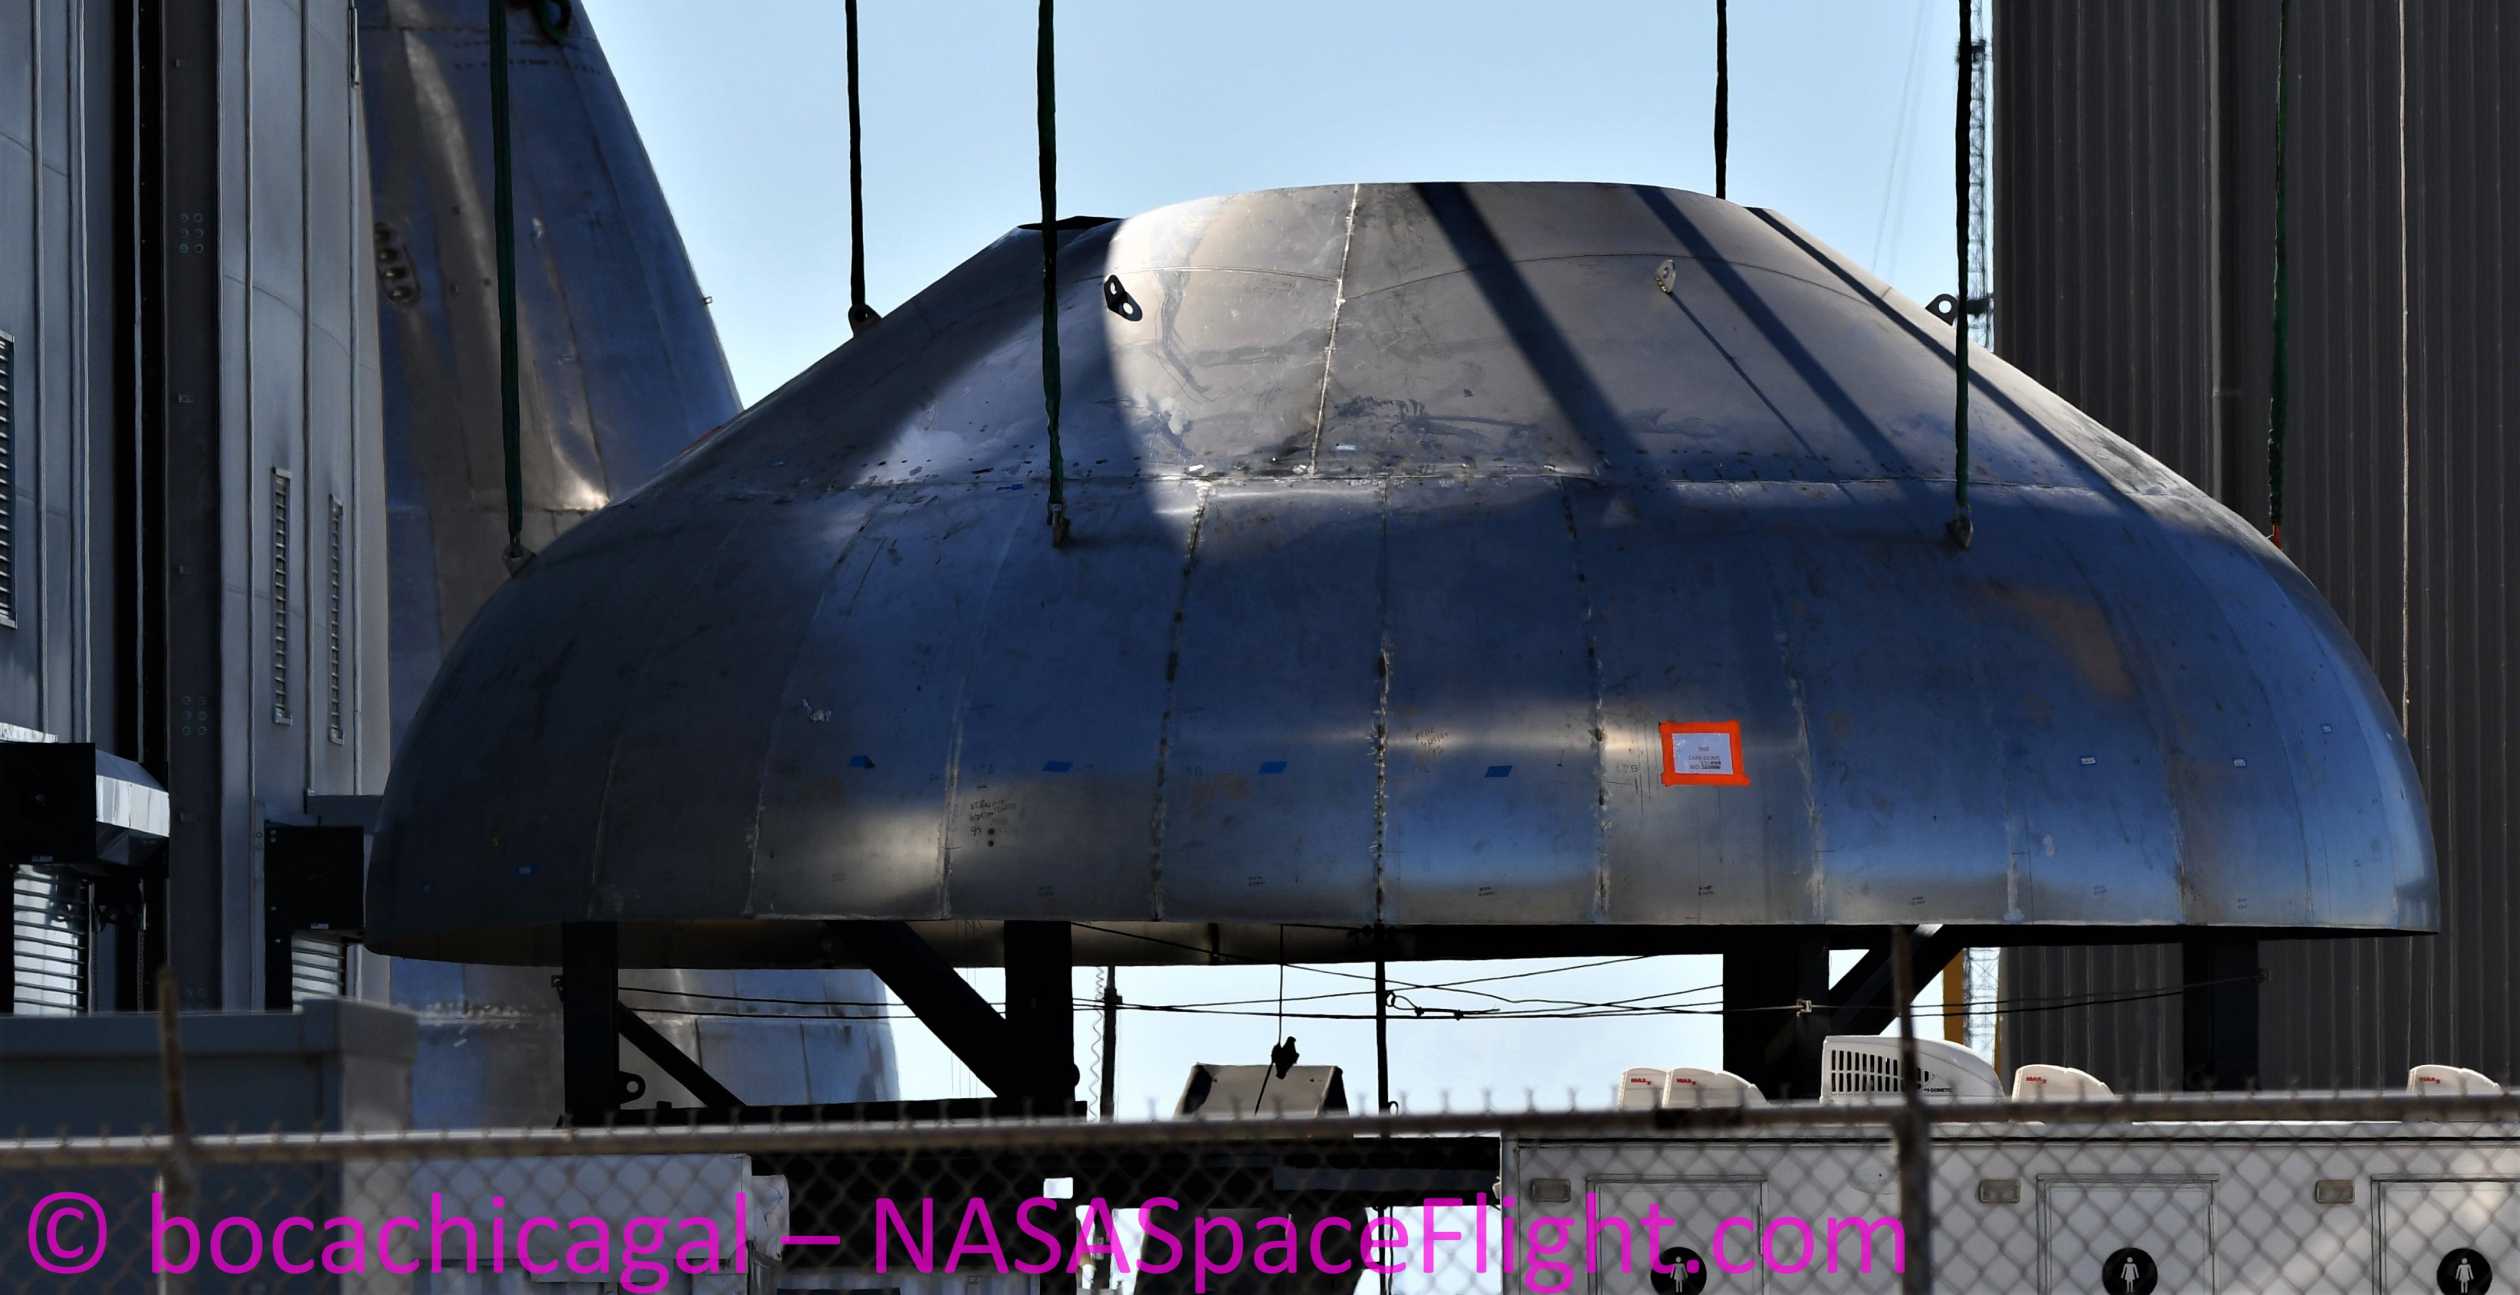 Starship Boca Chica 072020 (NASASpaceflight – bocachicagal) SN8 common dome 3 crop (c)